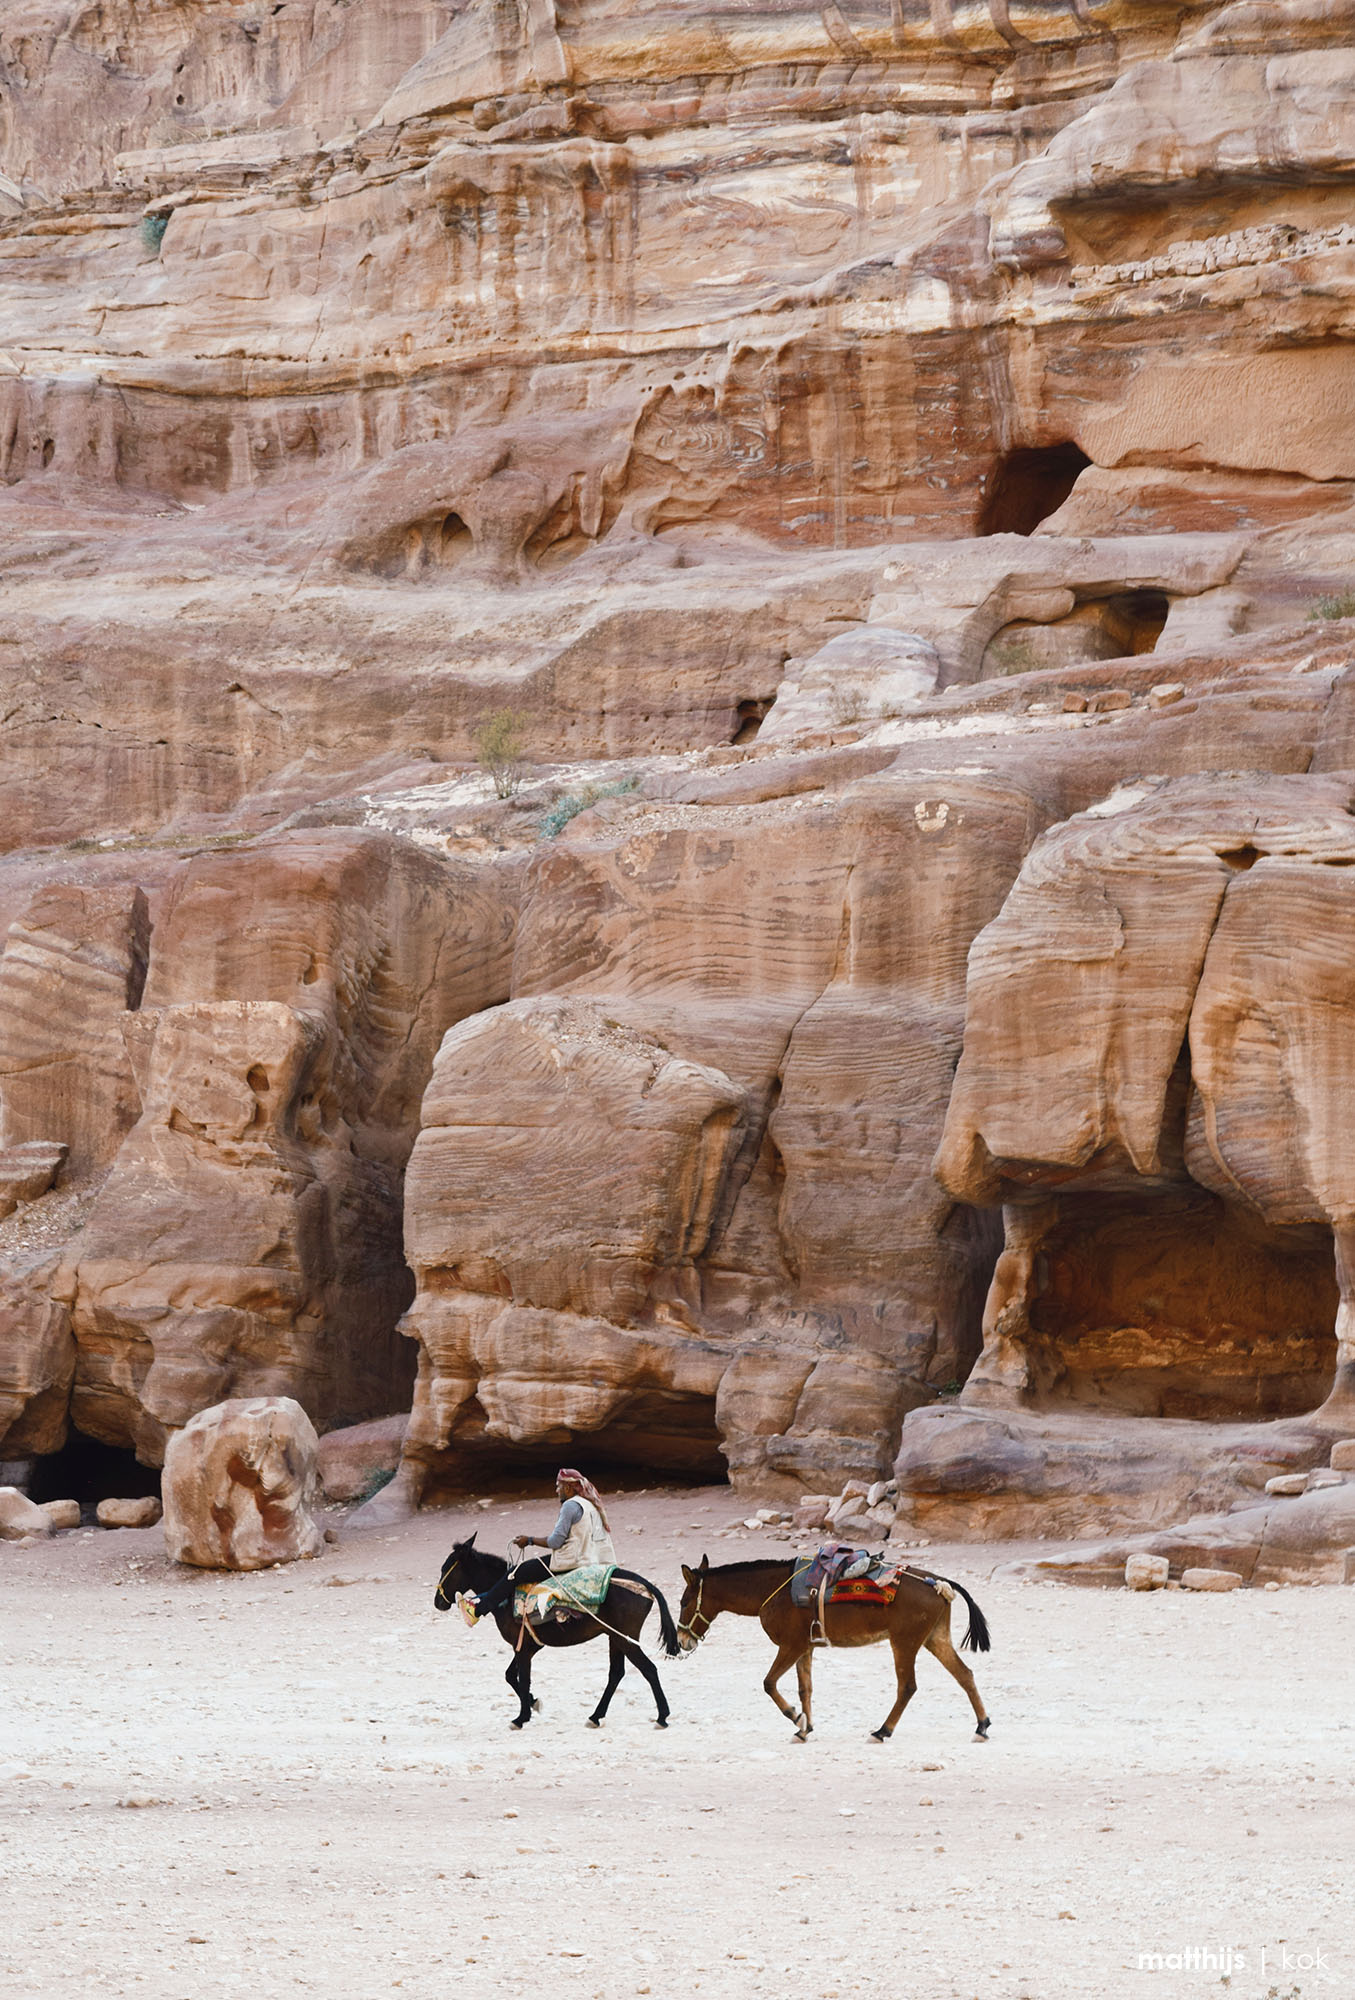 Basin Area, Petra, Jordan | Photography by Matthijs Kok